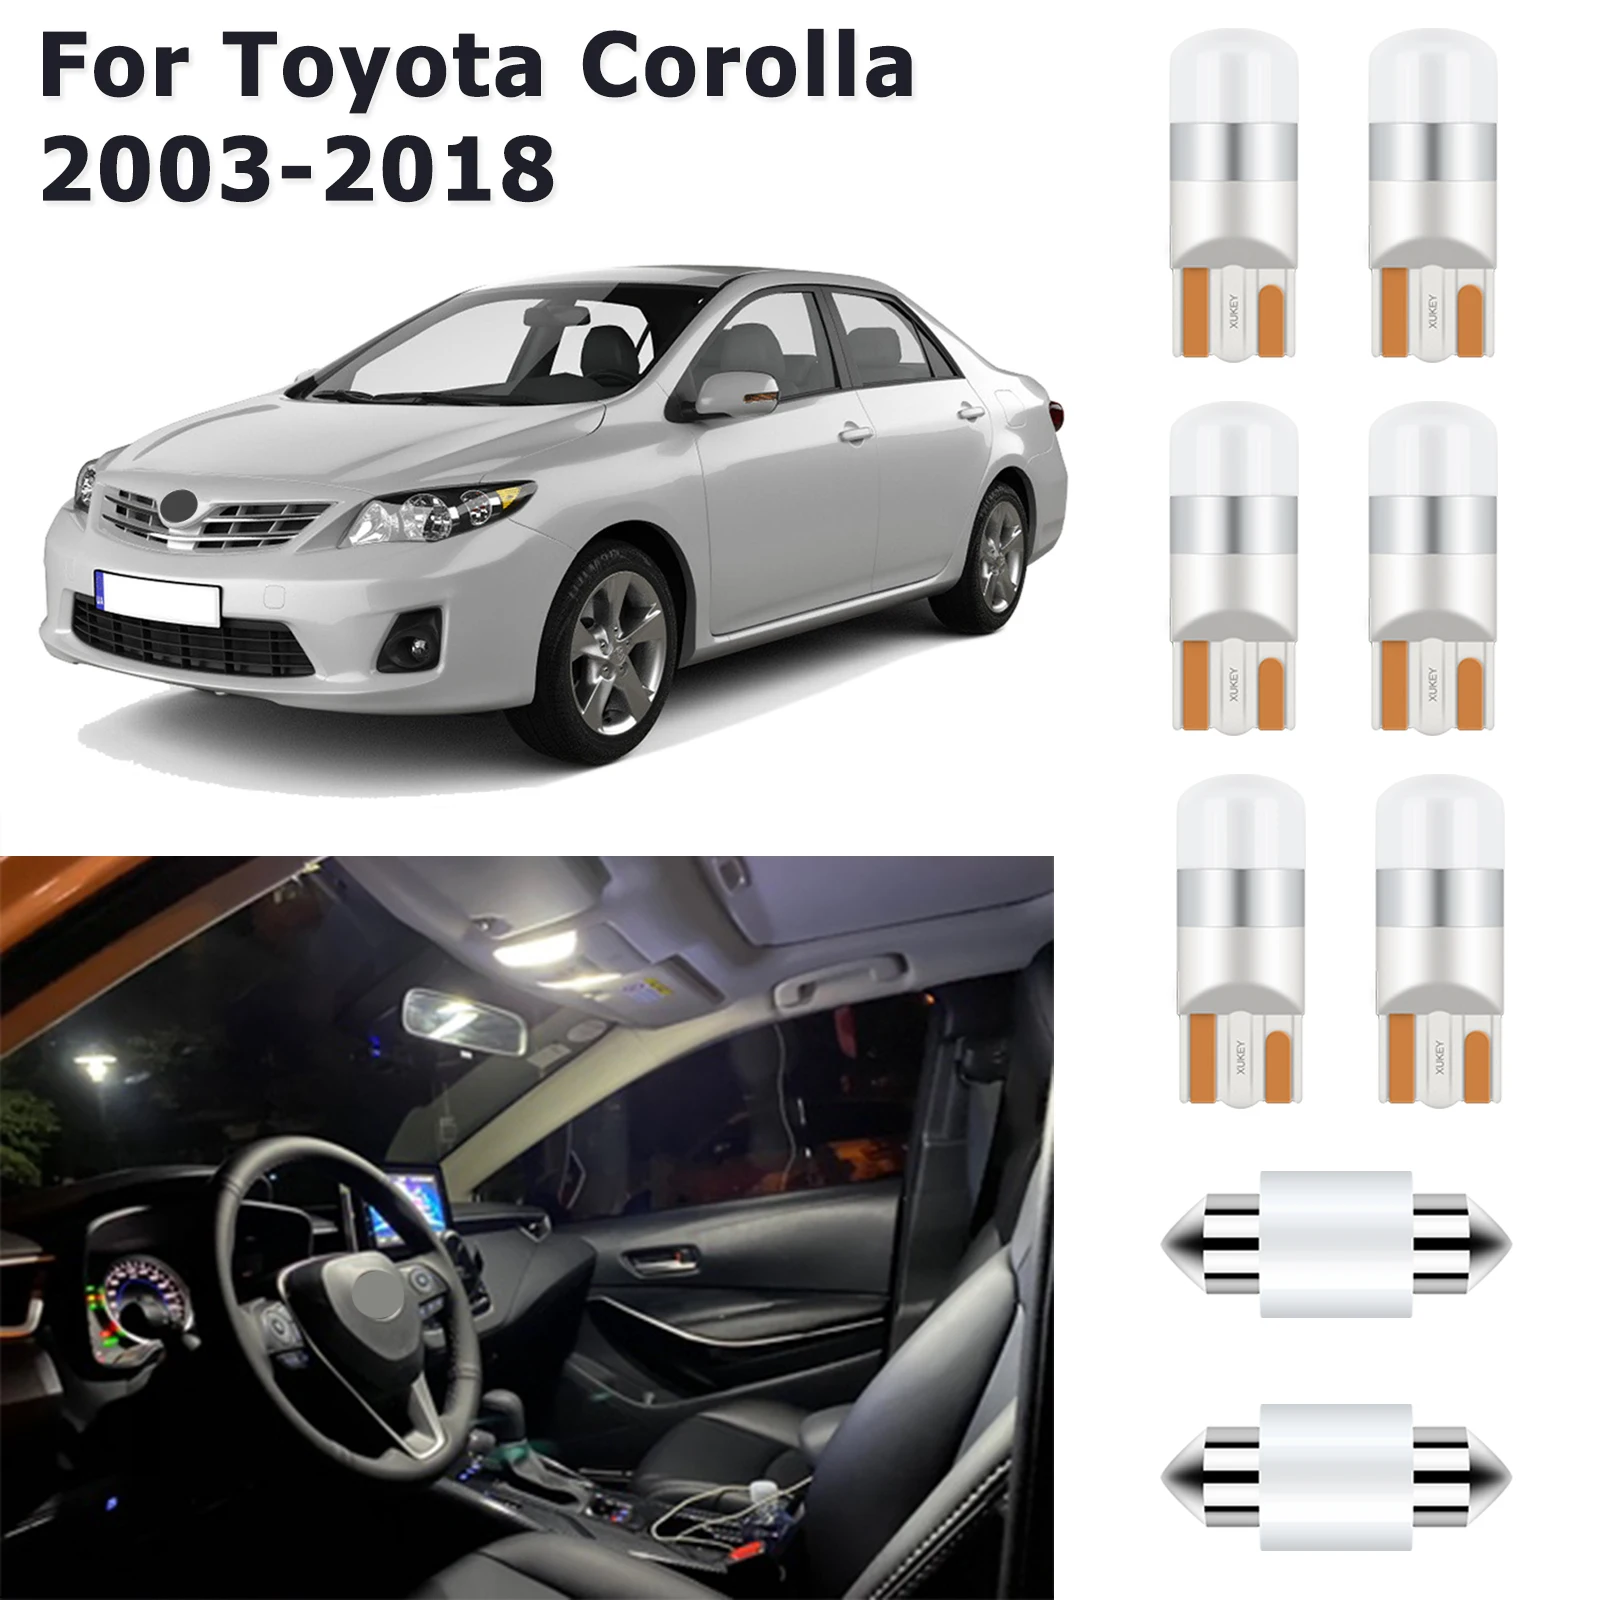 

8 лампочек Белый светодиодный внутренний светильник Карта Купол багажник потолочный светильник комплект для Toyota Corolla E120 E130 E140 E150 E160 E170 E180 ...